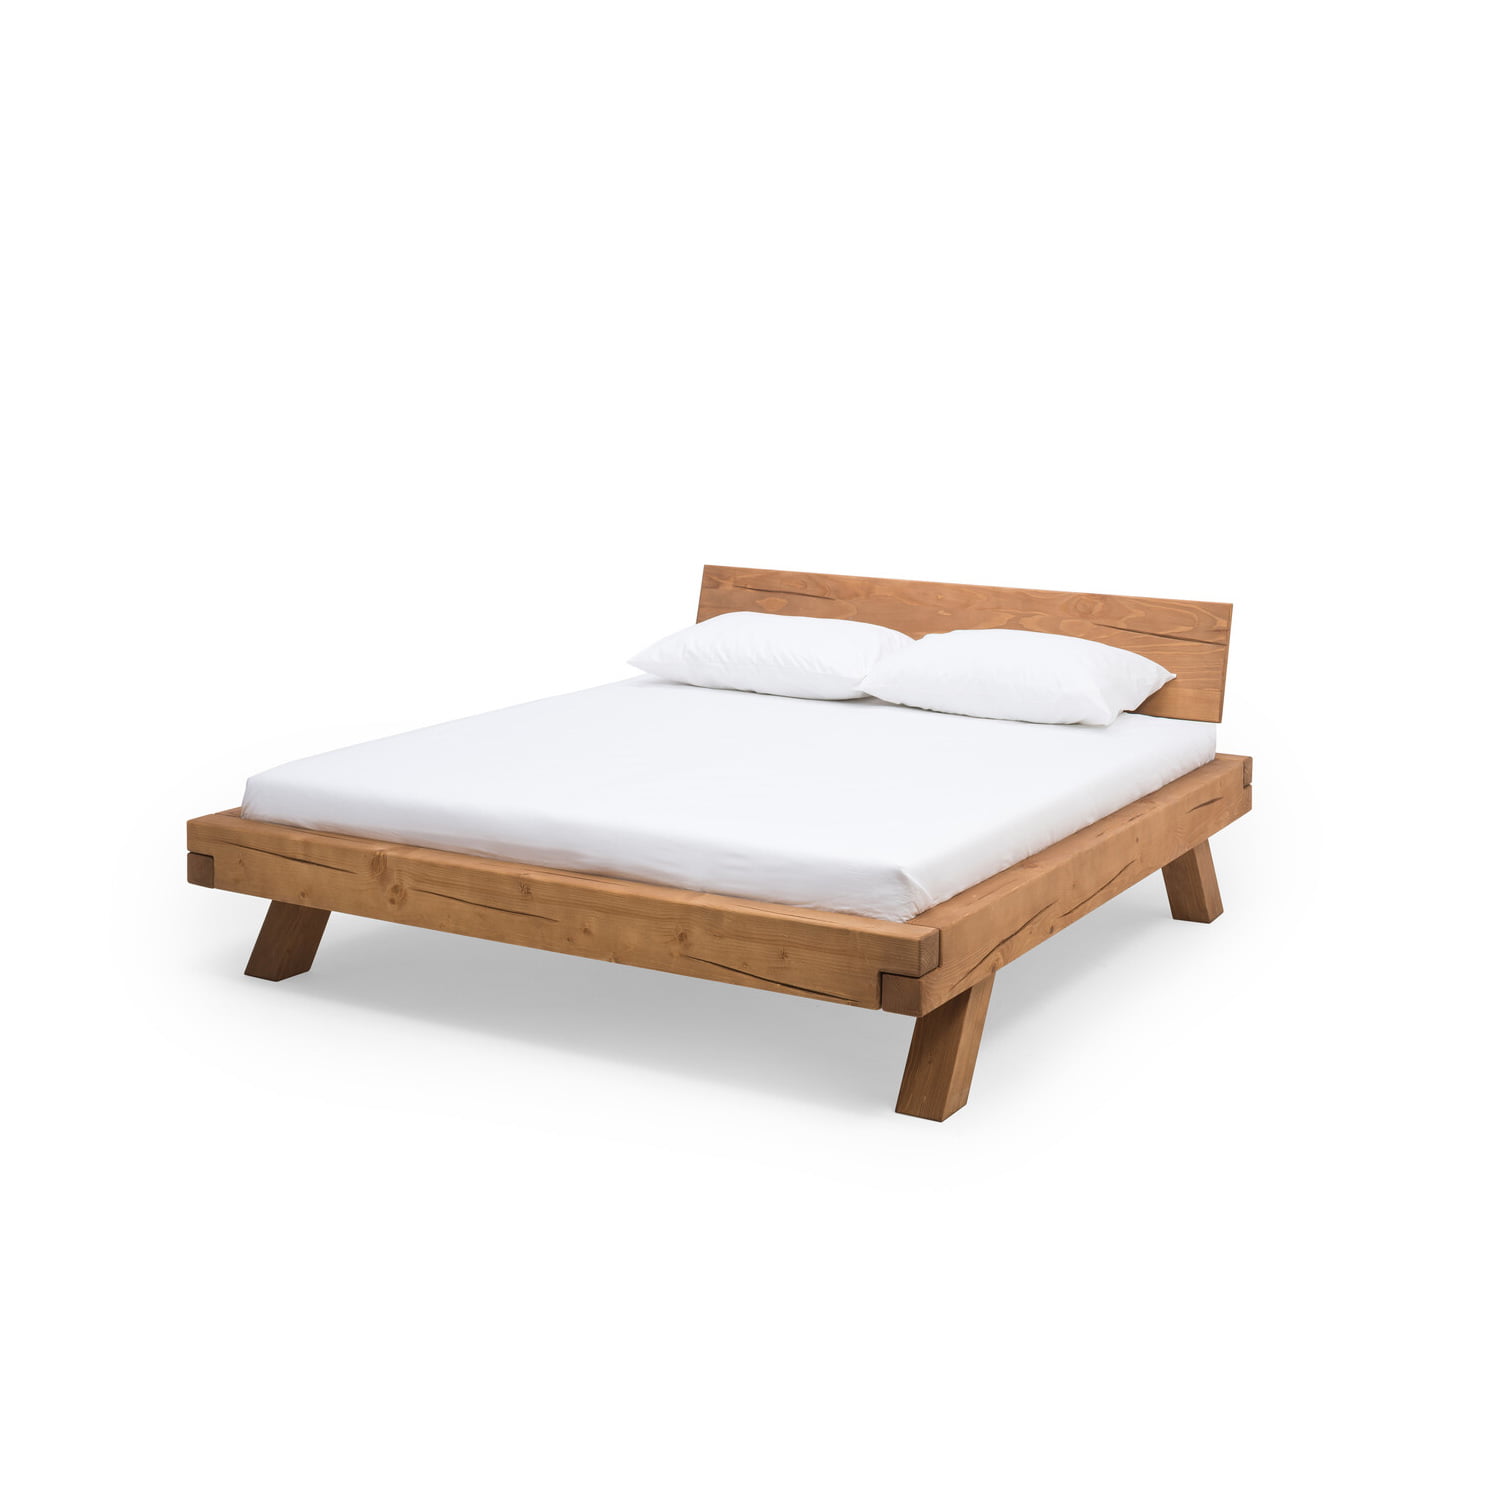 Bed Romeo Vurenhout 180x200cm